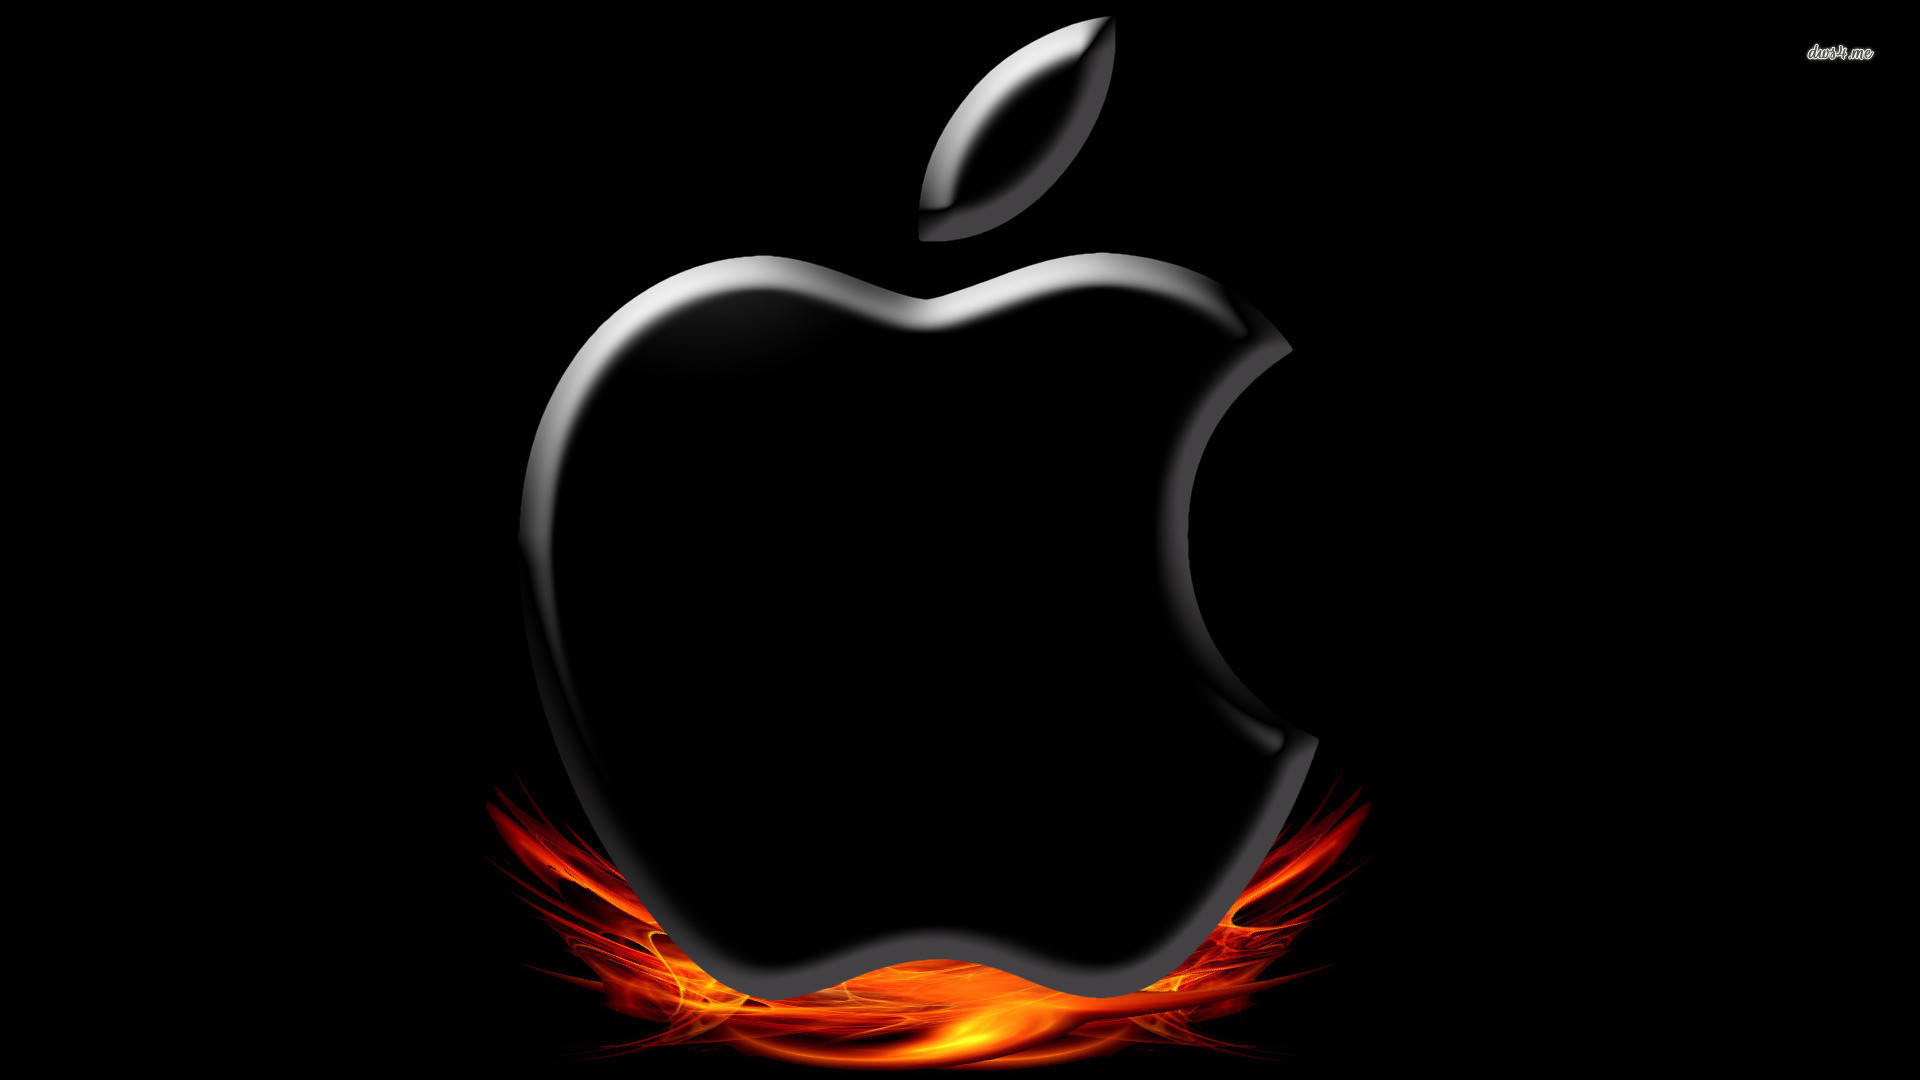 On Fire Apple Logo Background